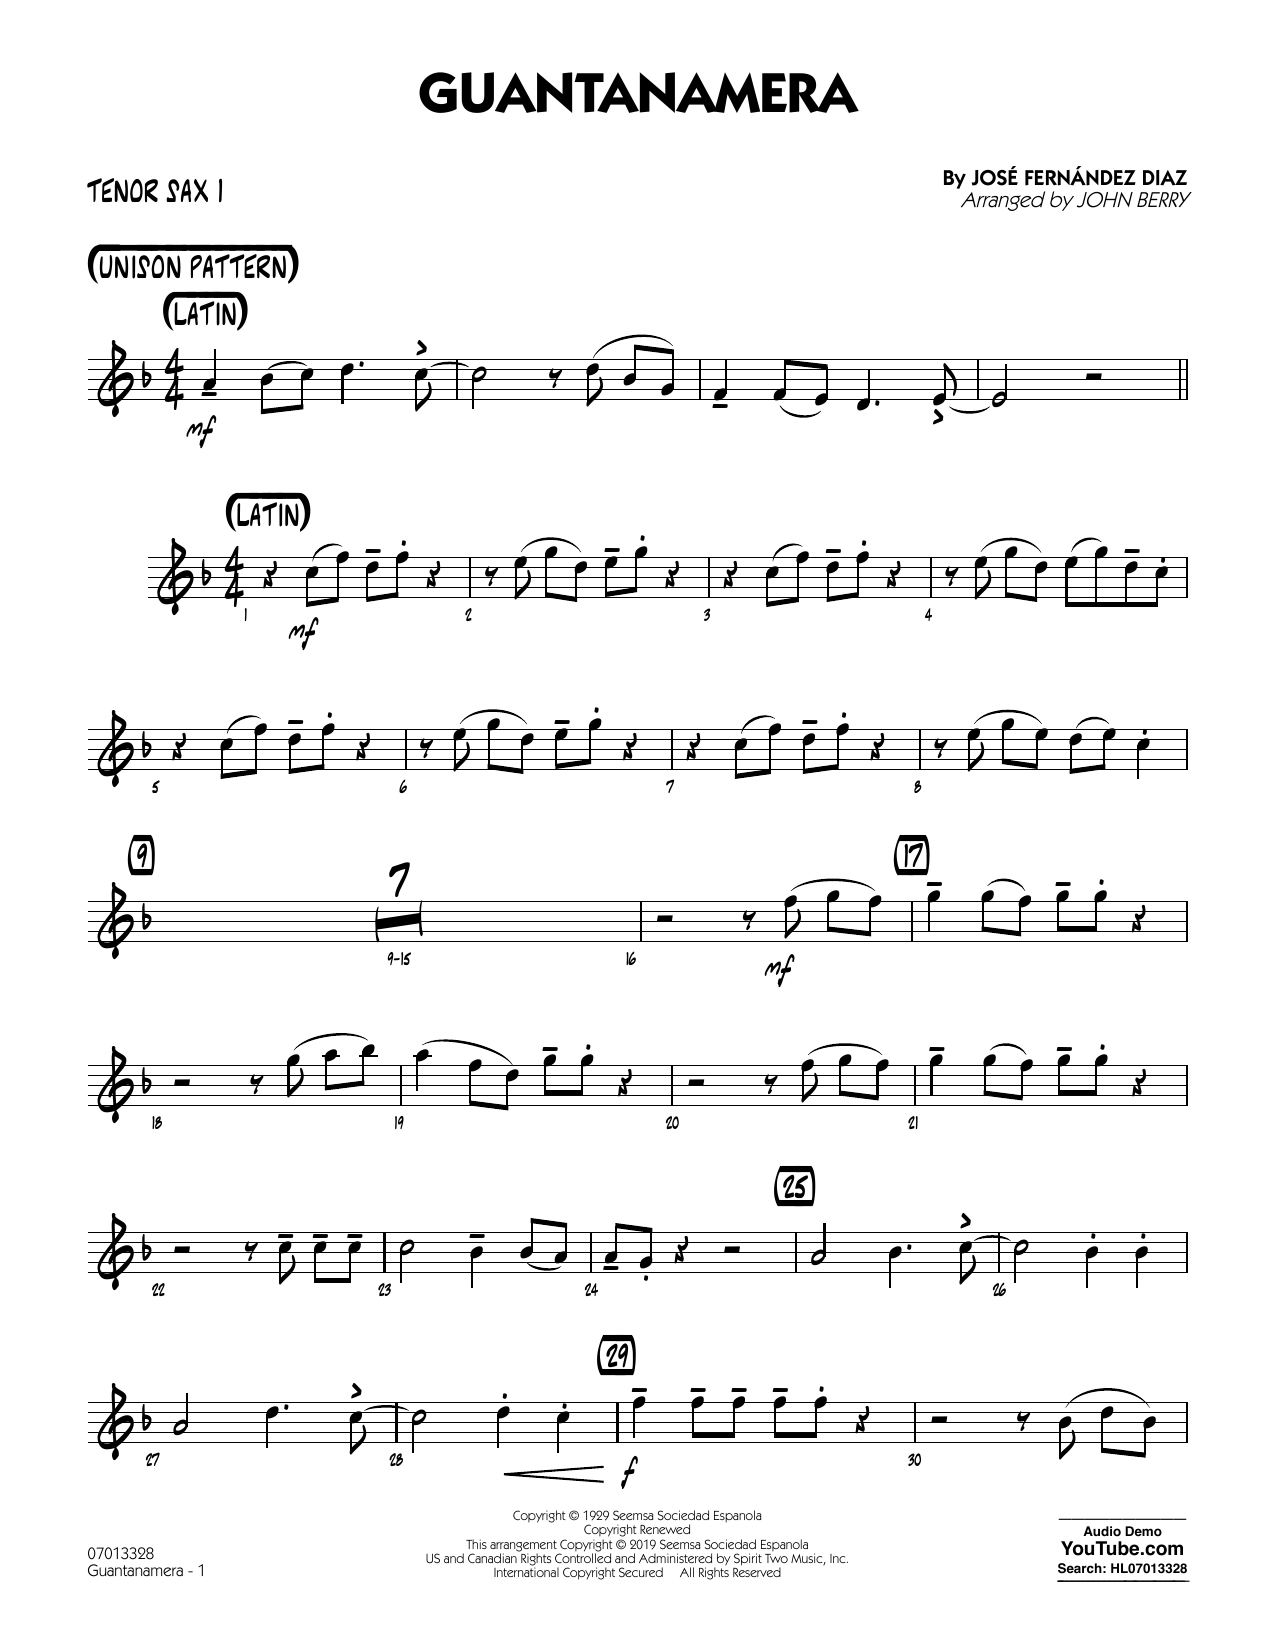 José Fernández Diaz Guantanamera (arr. John Berry) - Tenor Sax 1 Sheet Music Notes & Chords for Jazz Ensemble - Download or Print PDF